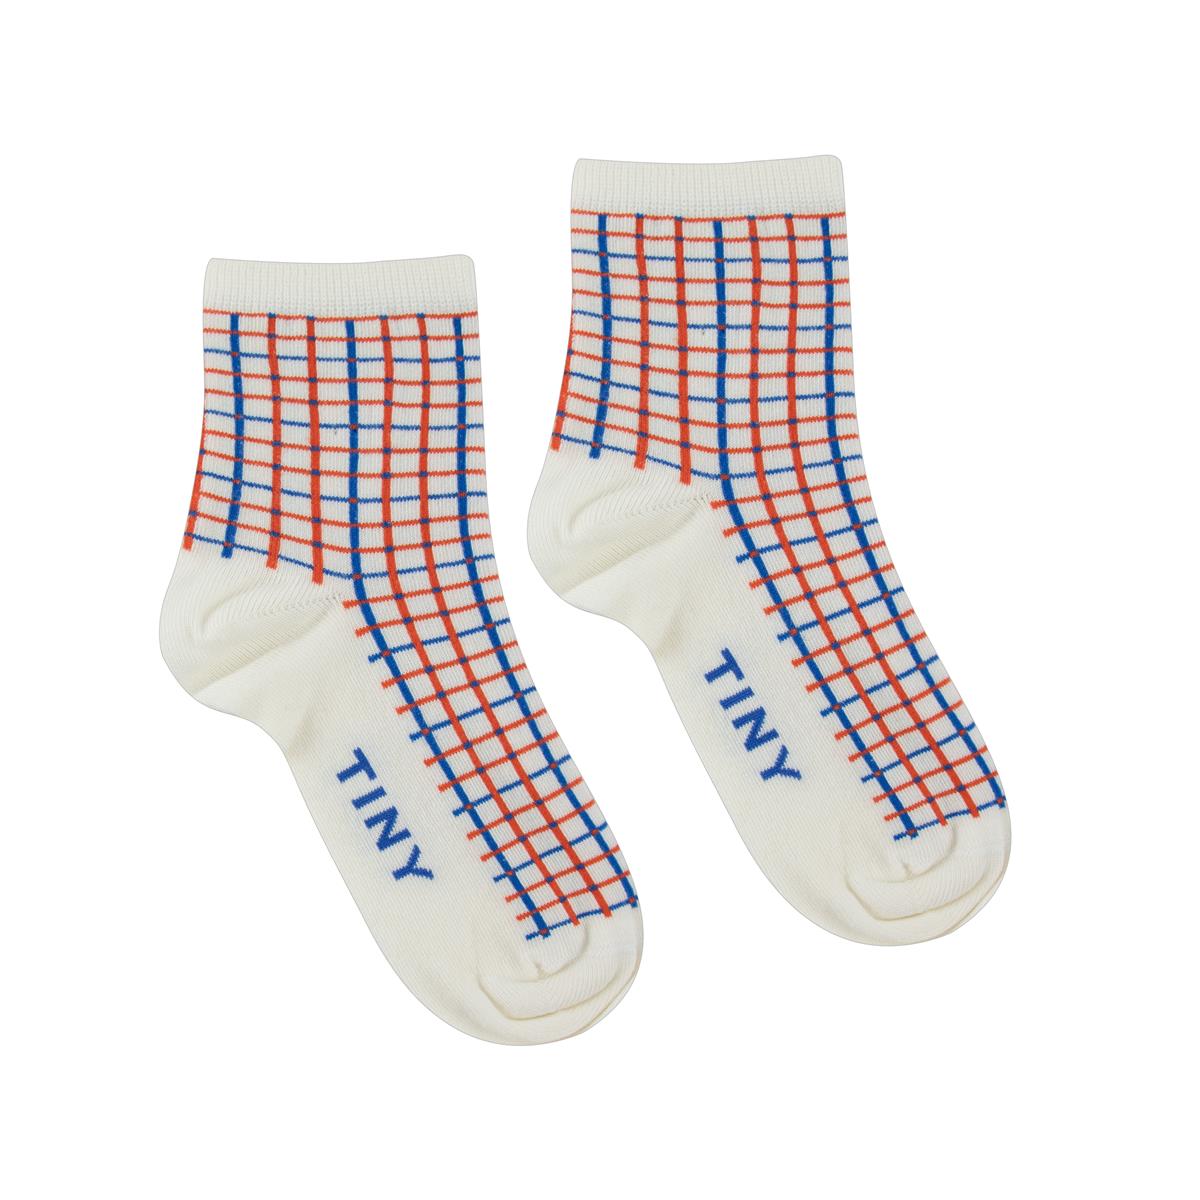 Tinycottons - Grid Quarter socks